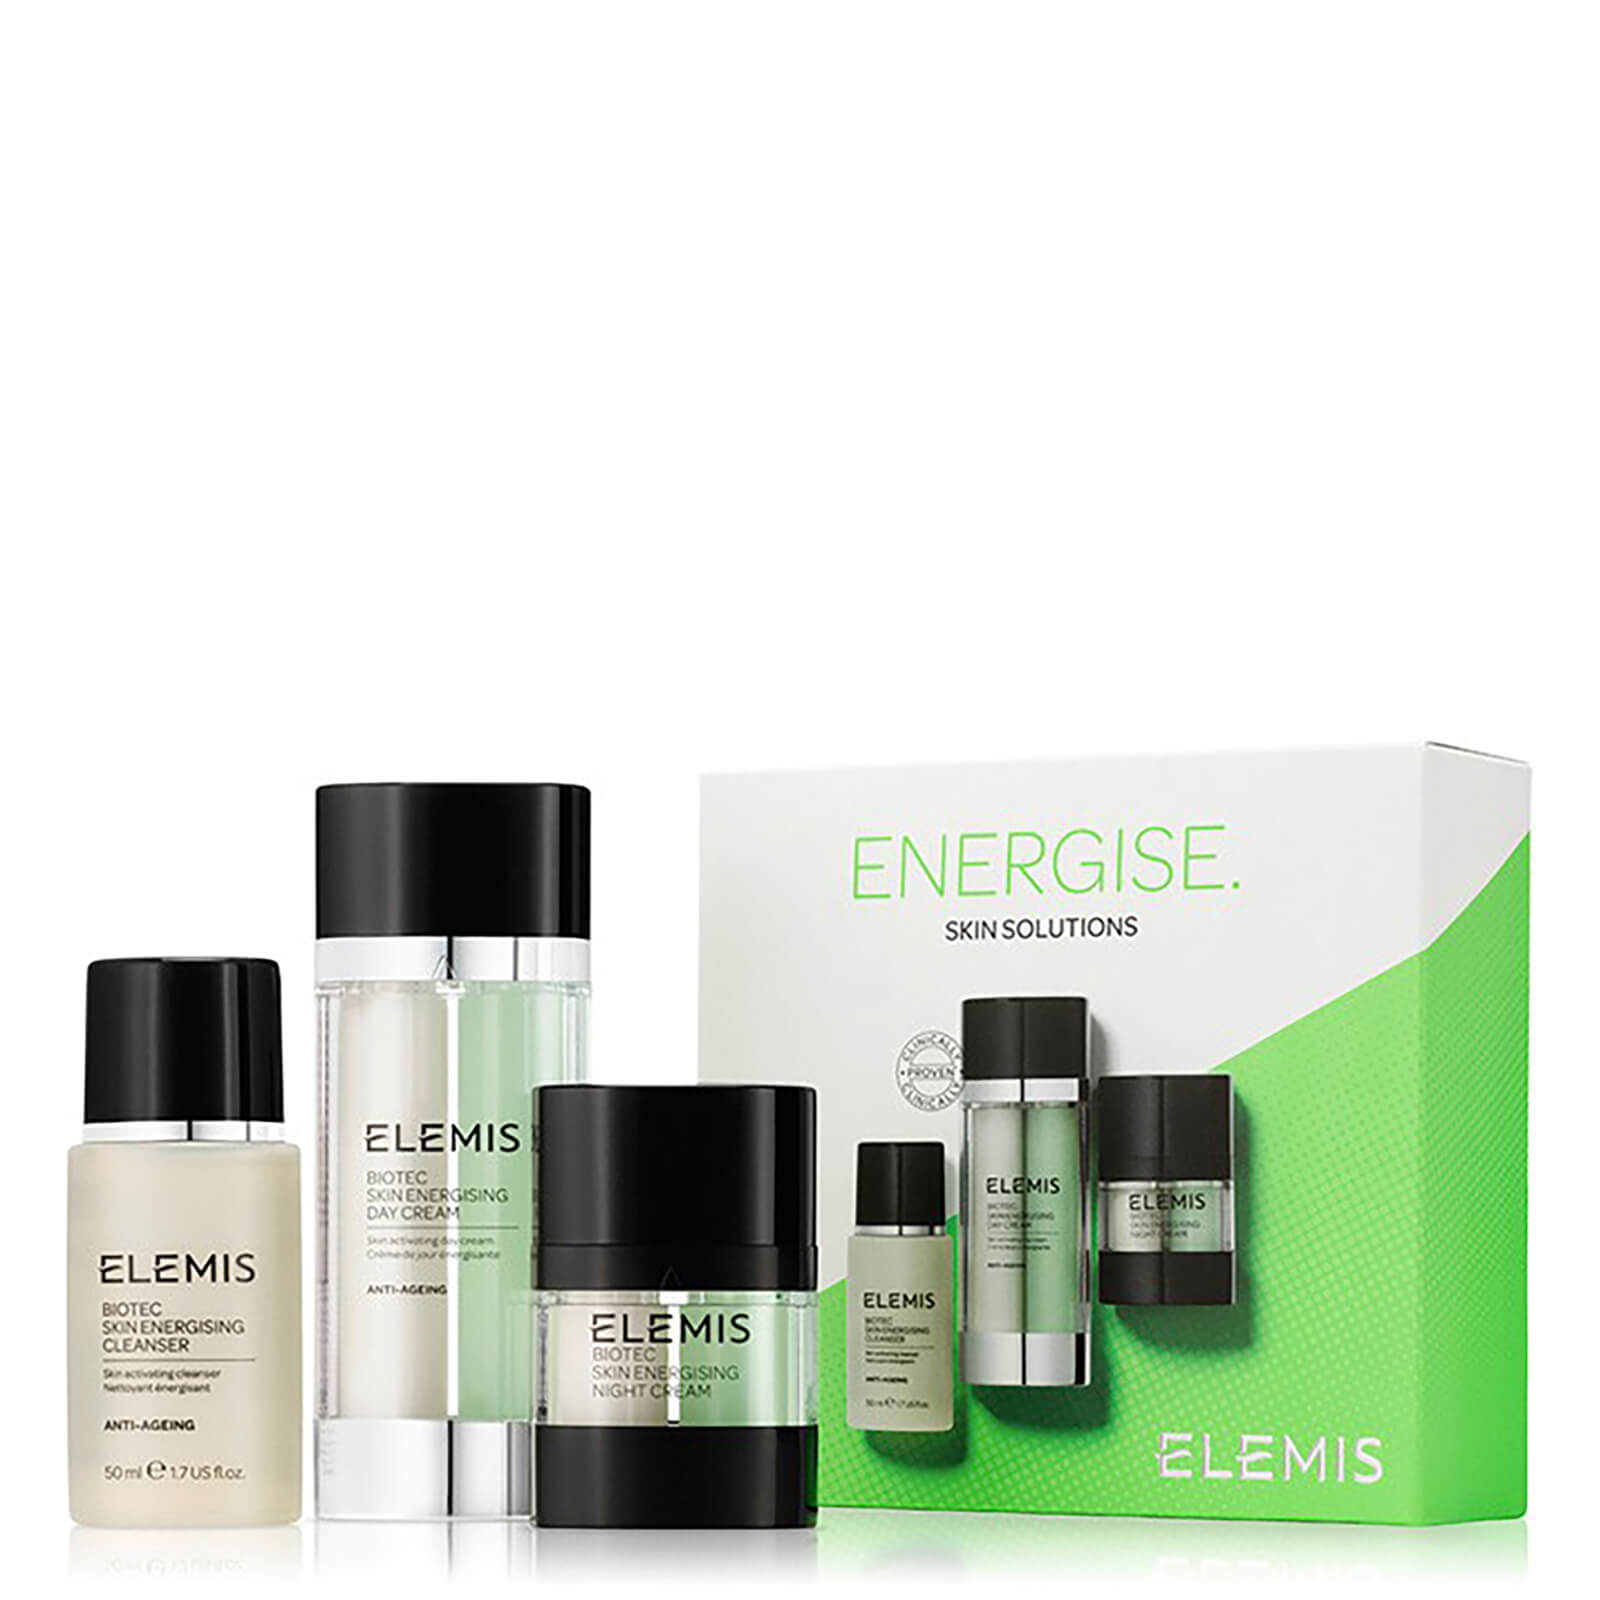 Solución Your New Skin de Elemis - Energise